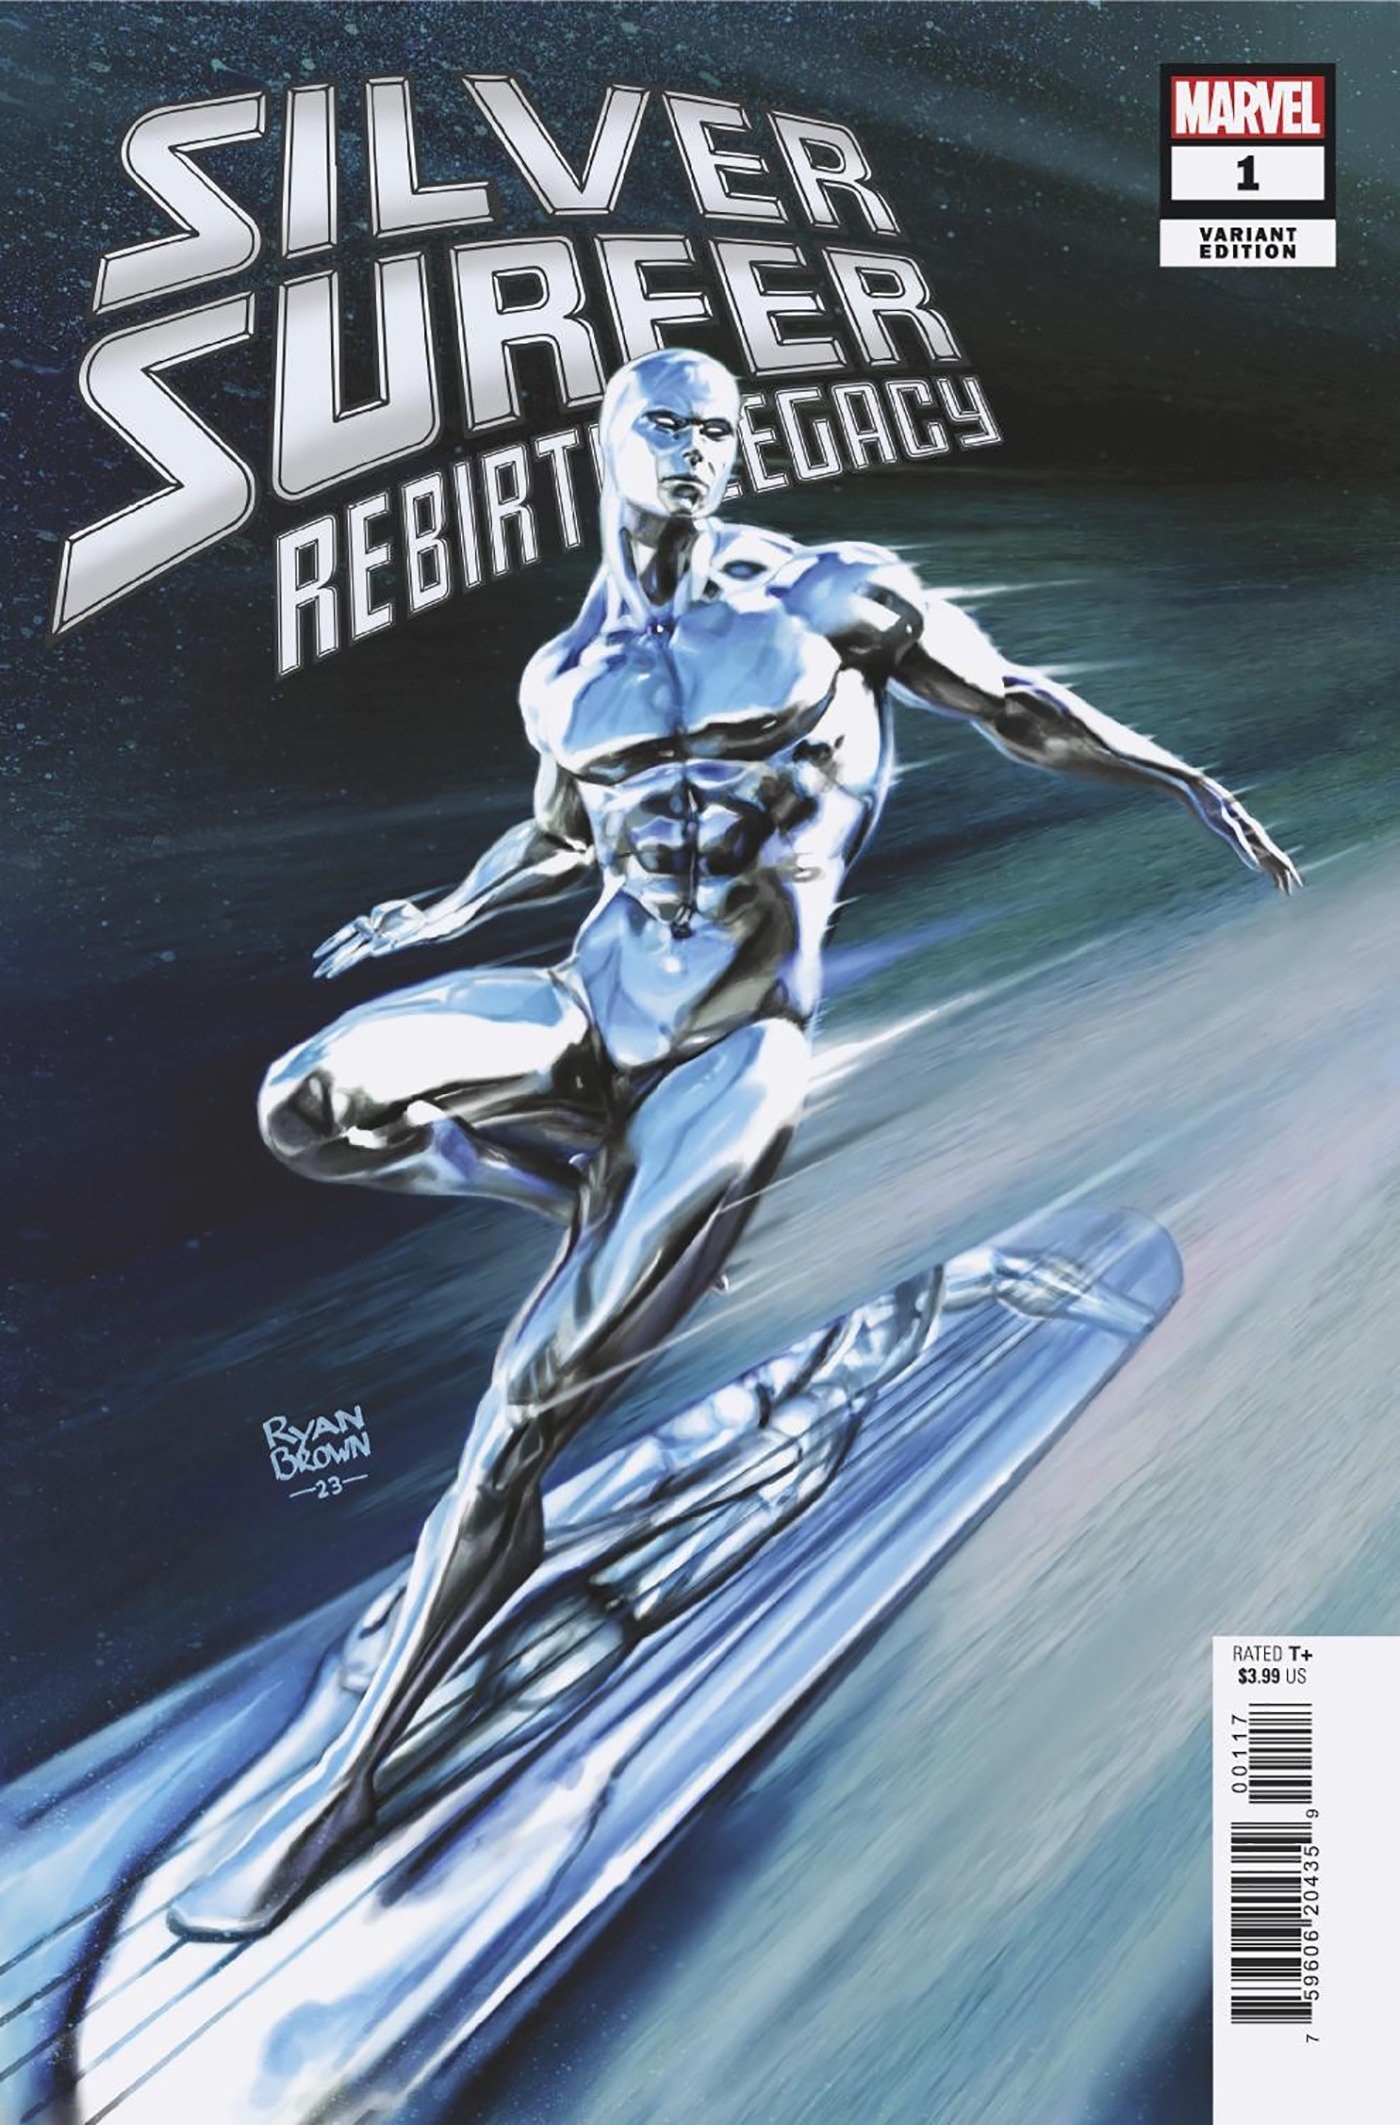 Silver Surfer Rebirth: Legacy #1 Ryan Brown 1 for 25 Incentive